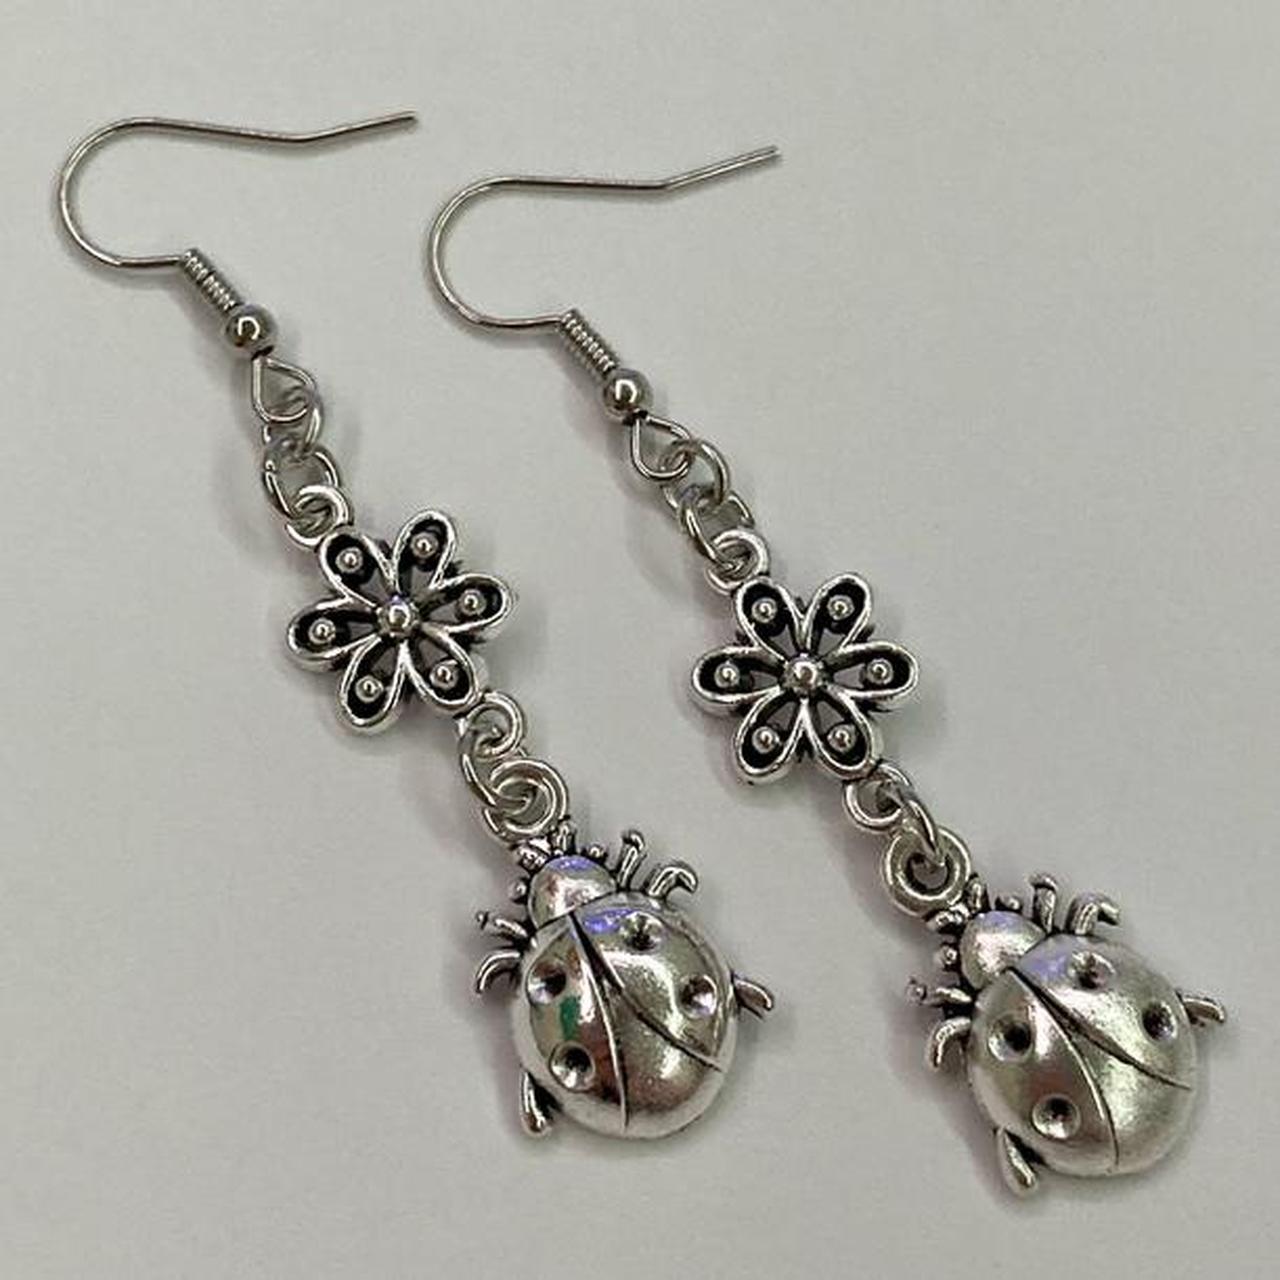 Product Image 1 - Floral Ladybug Earrings 🐞
Handmade silver